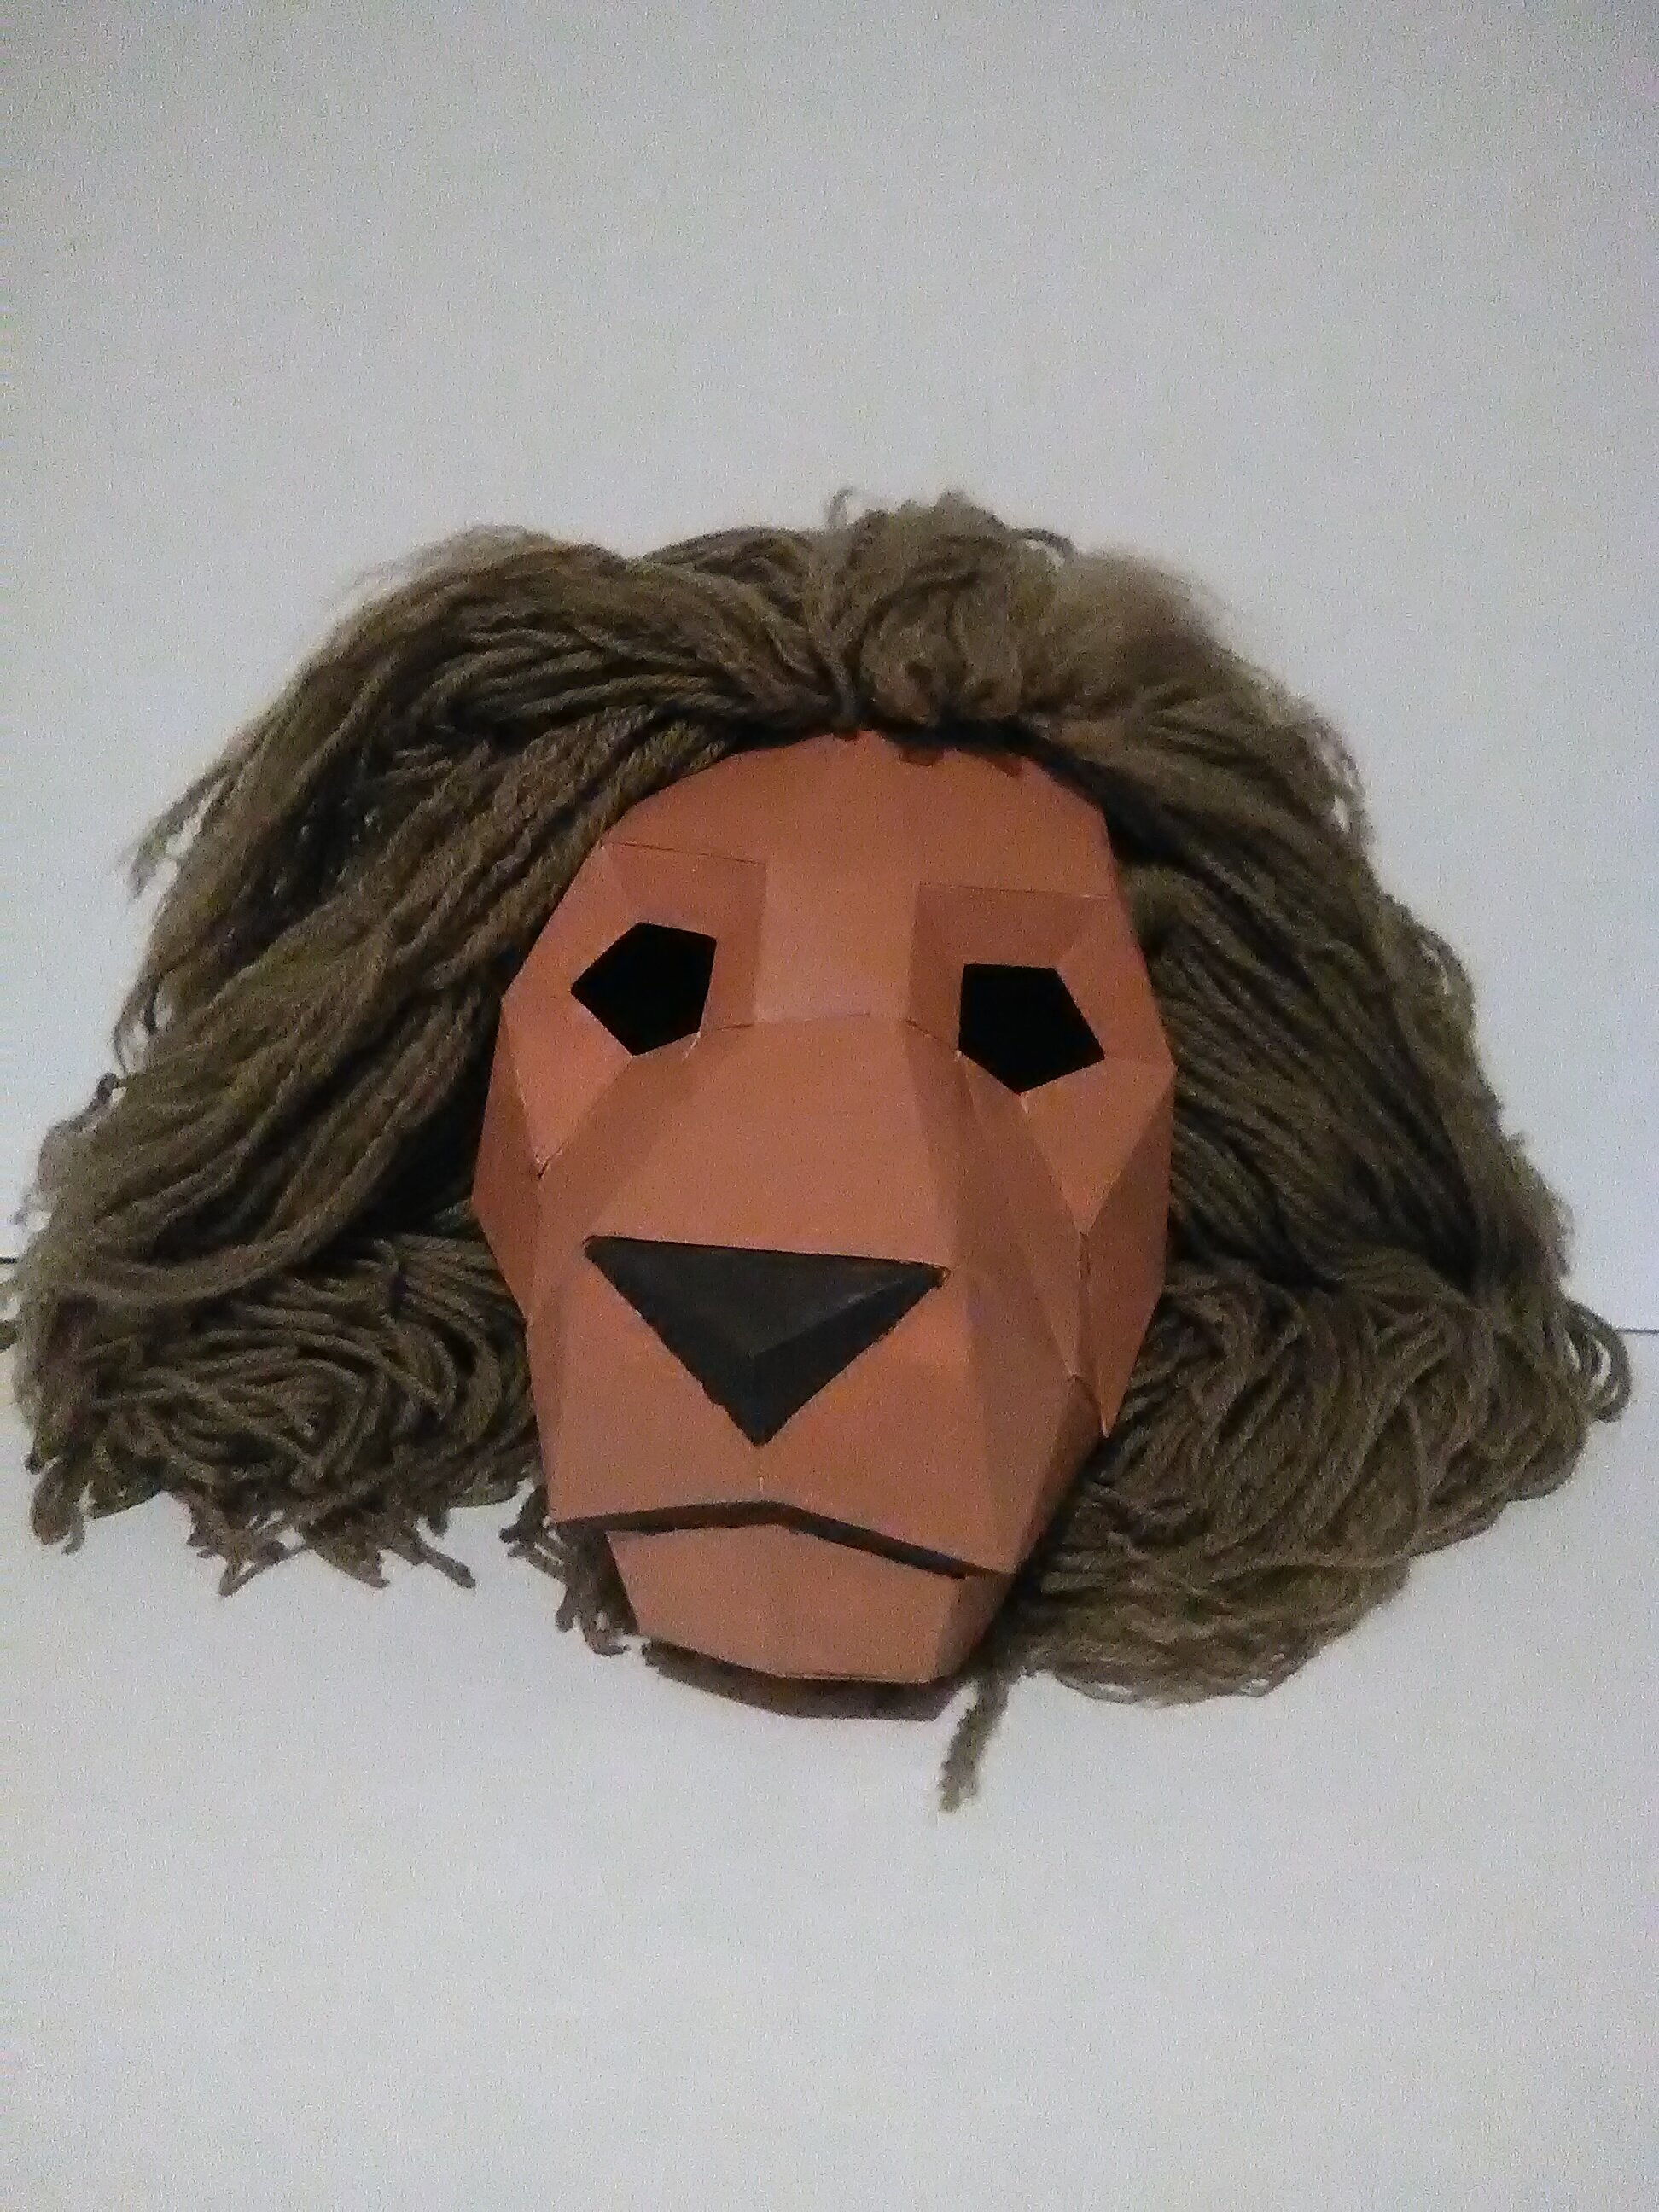 Lion.jpg